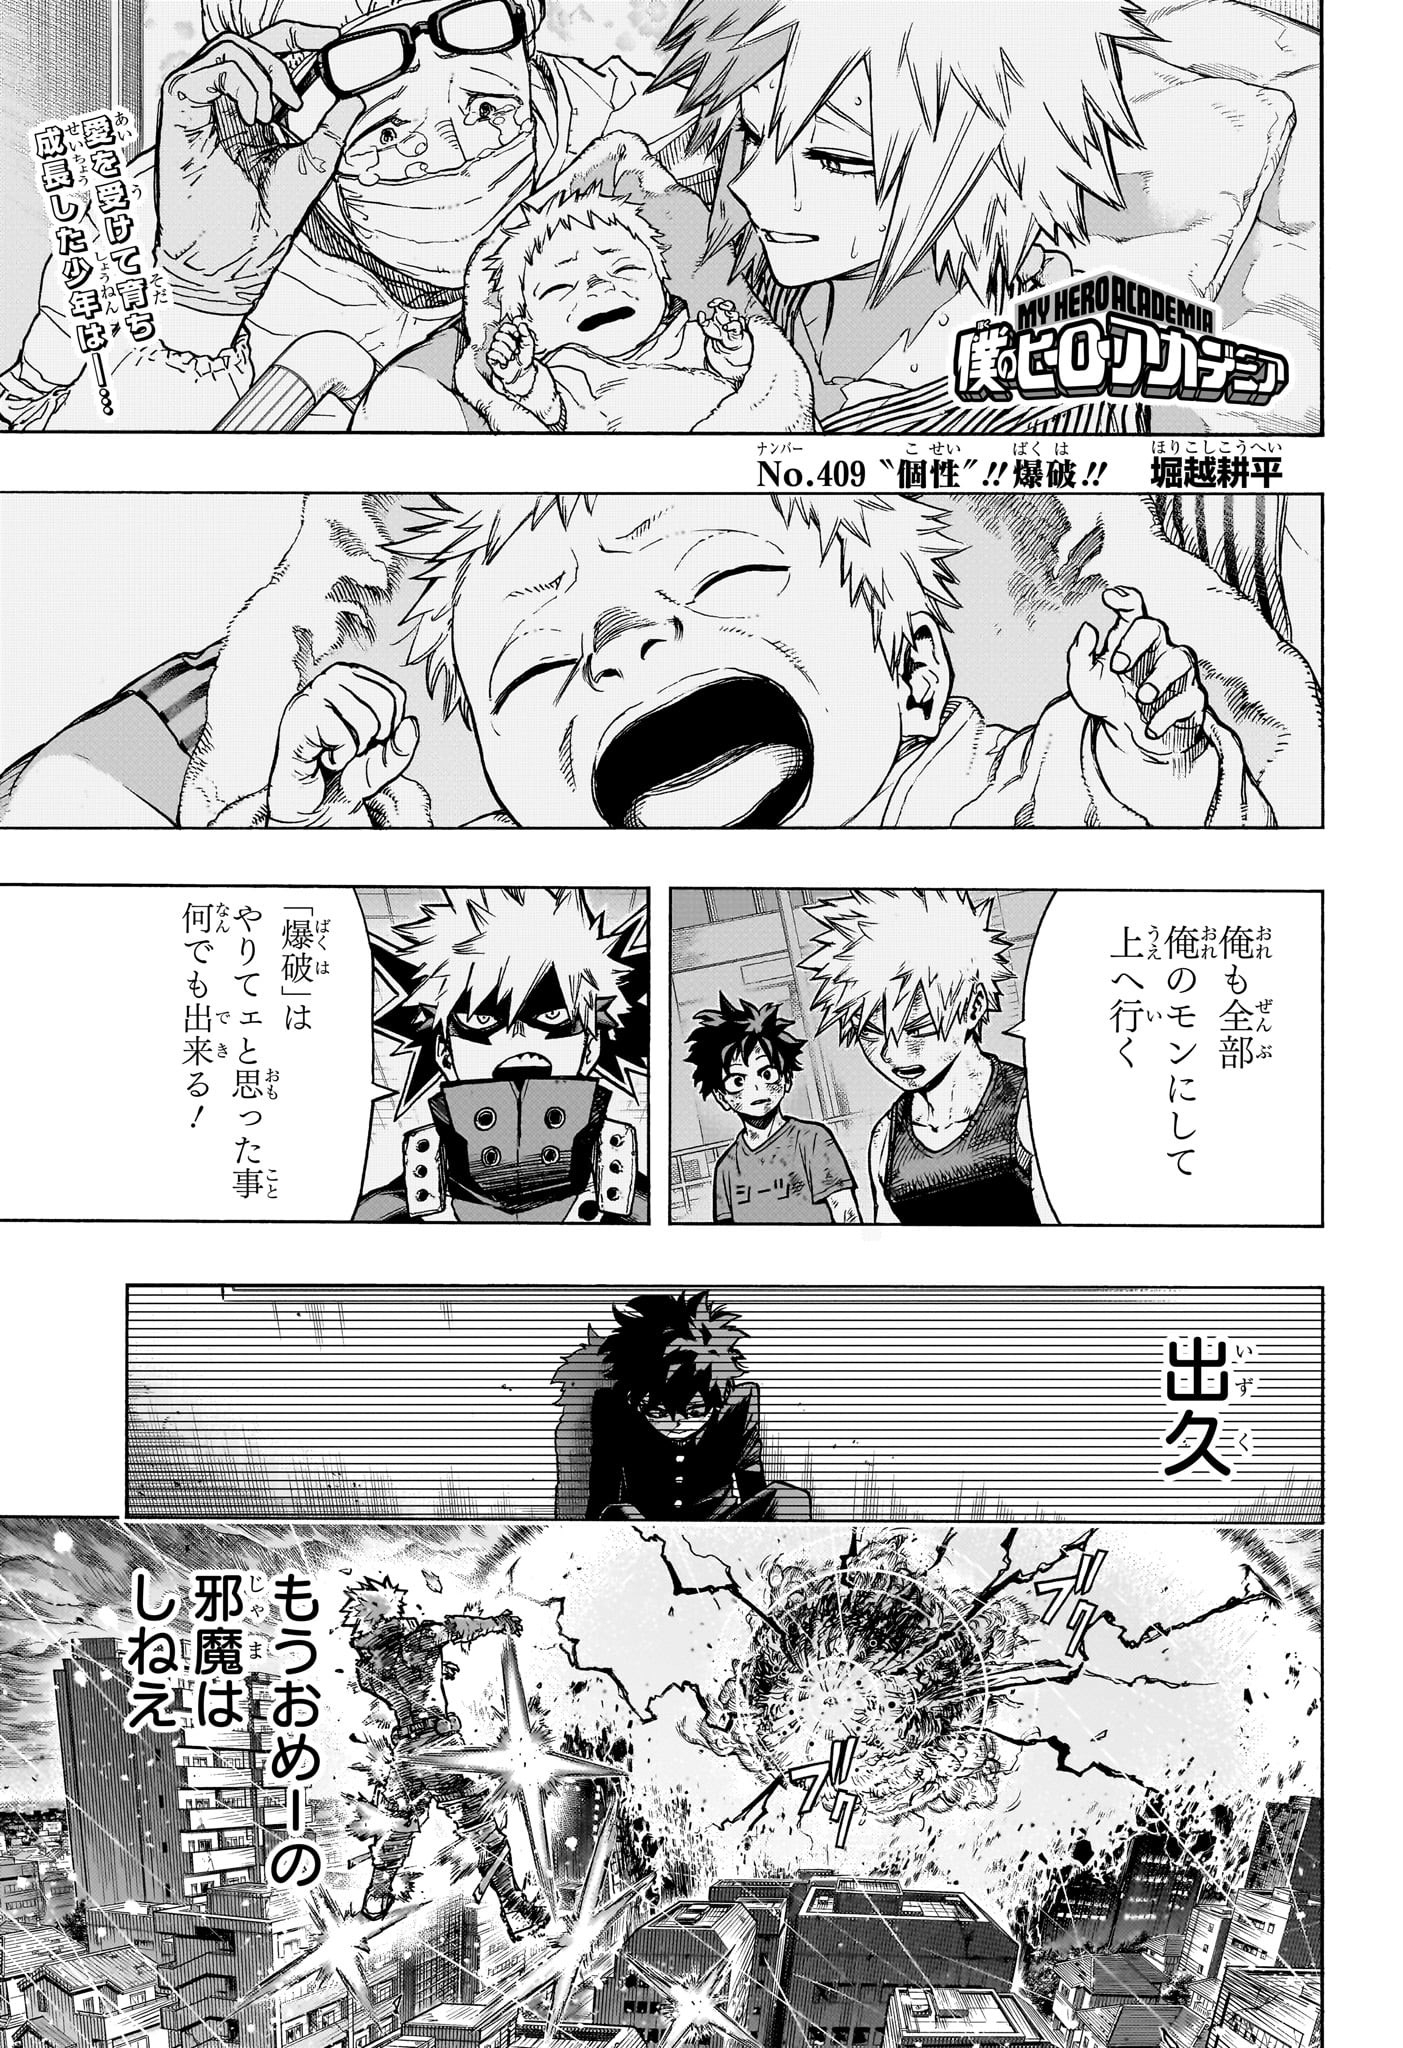 Boku no Hero Academia - Chapter 409 - Page 1